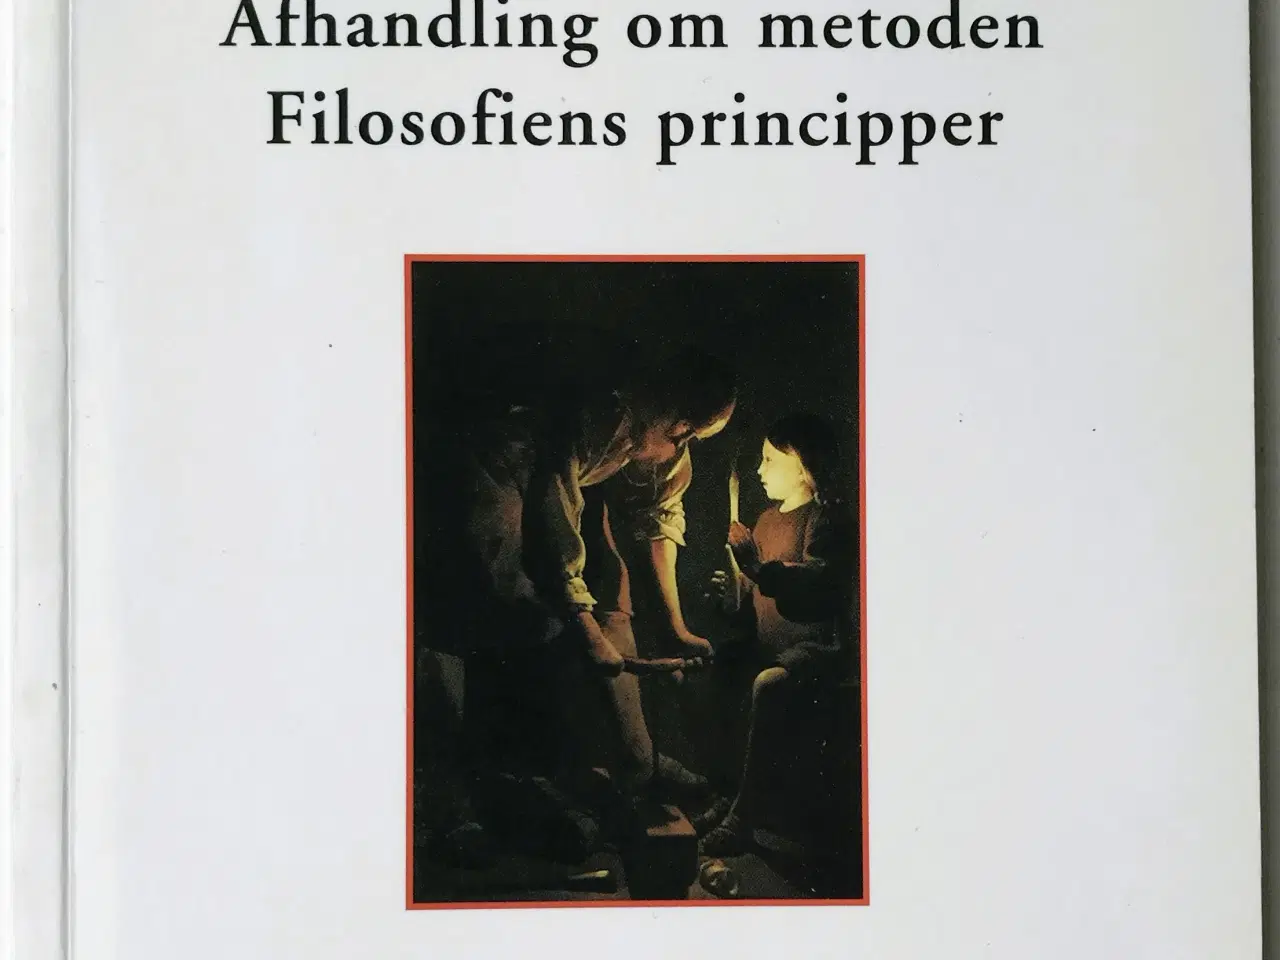 Billede 1 - Afhandling om metoden + Filosofiens principper